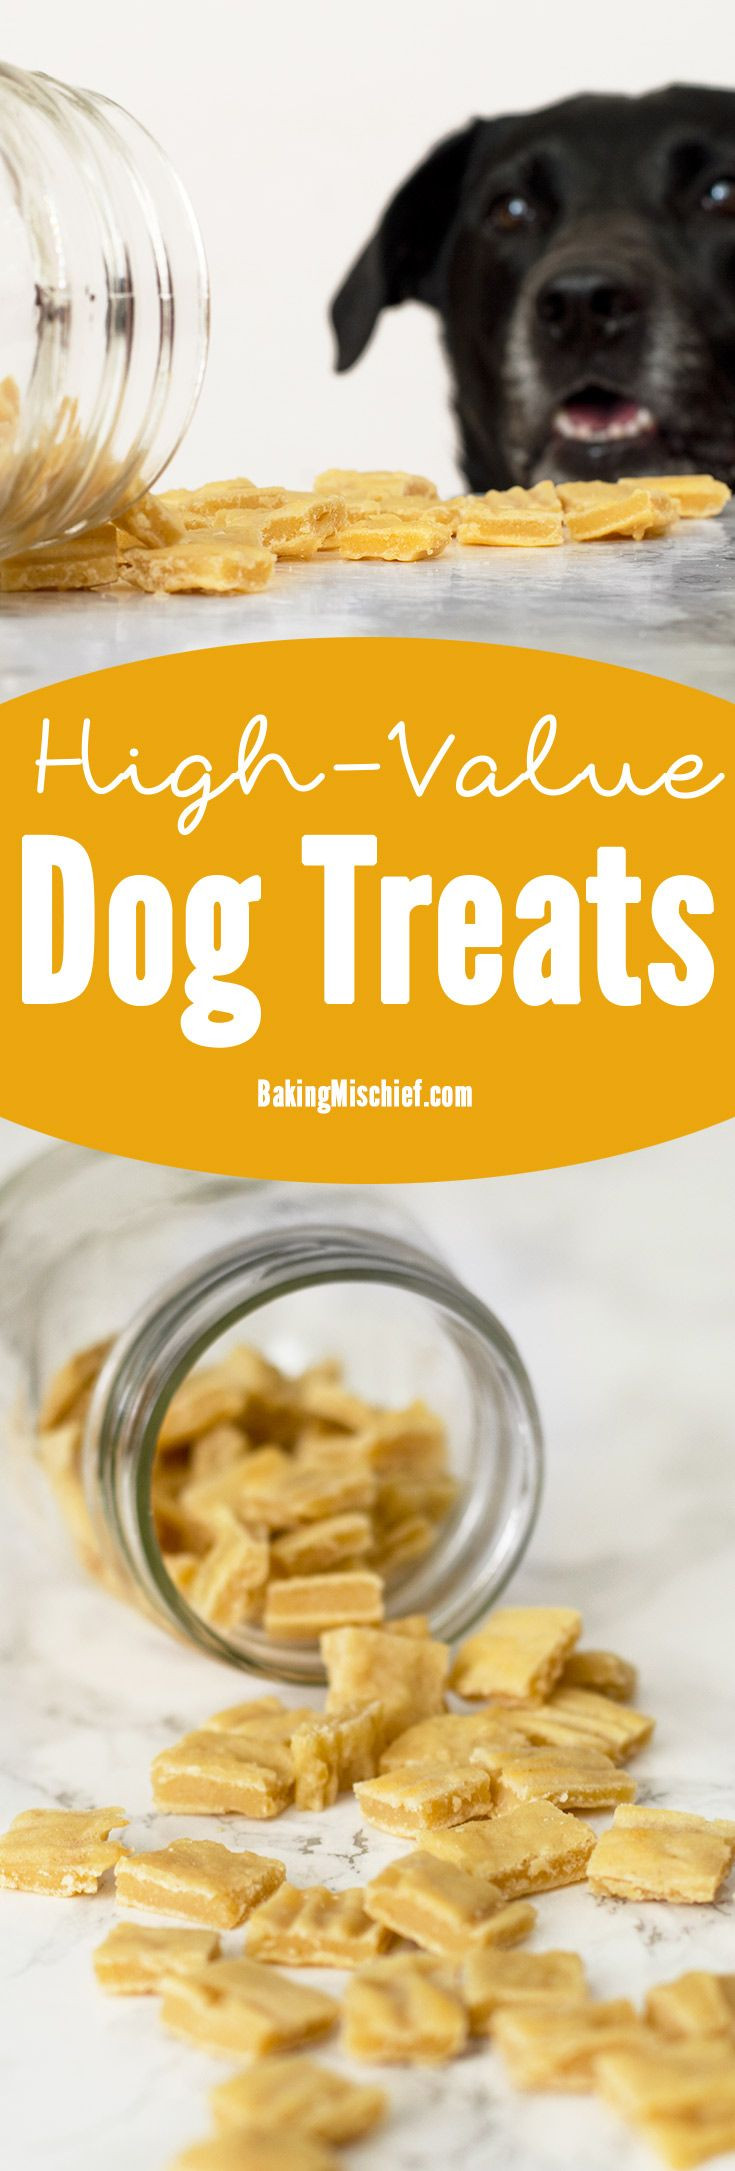 DIY Dog Training Treats
 The perfect homemade high value dog treats for training